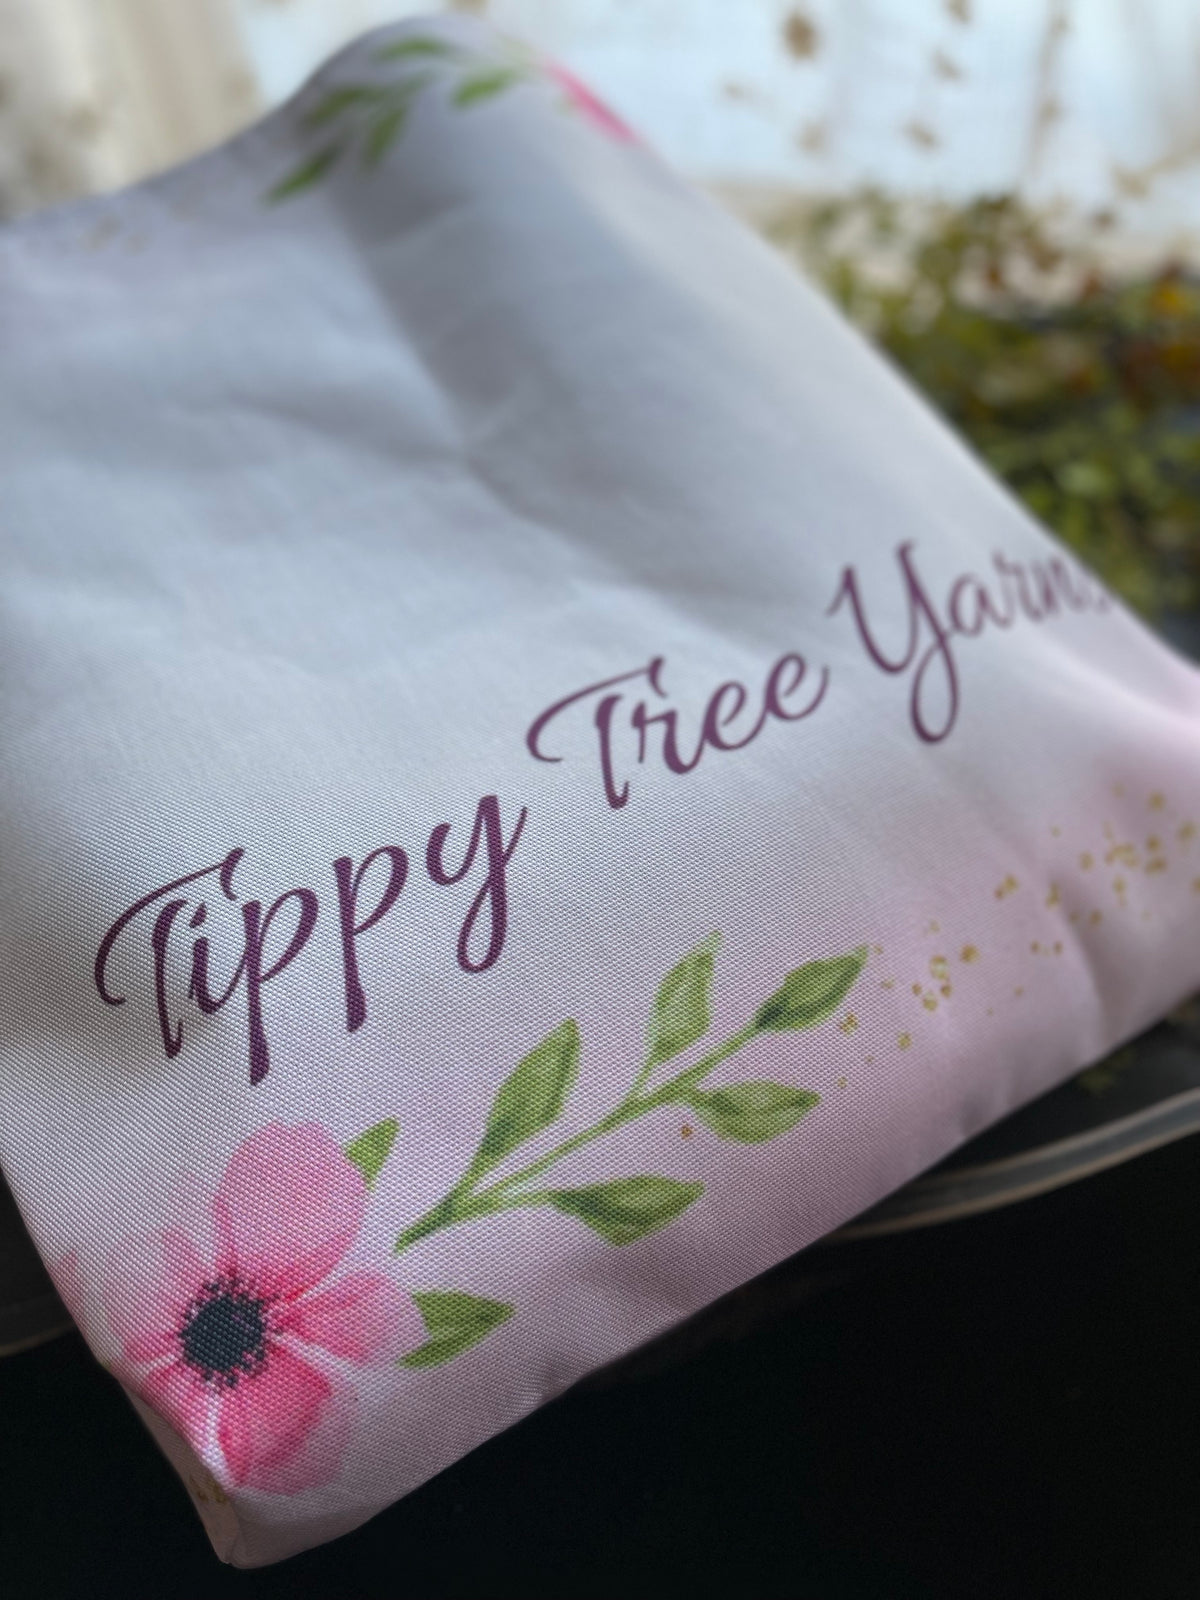 TIPPY TREE YARNS TOTE BAGS